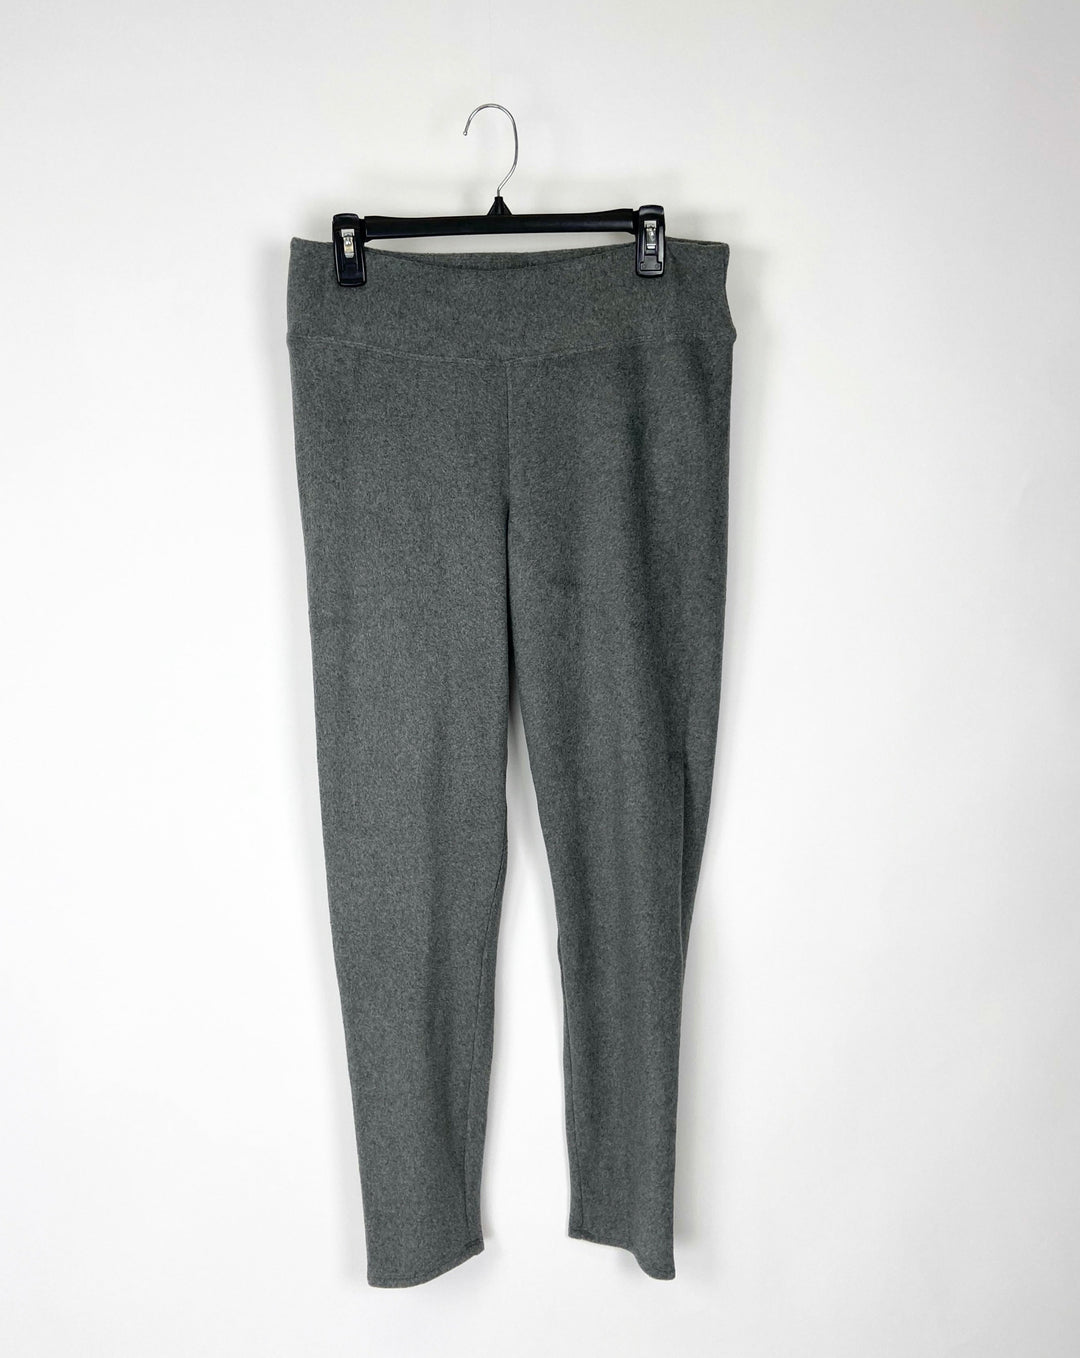 Grey Sweatpants - Size 14-16